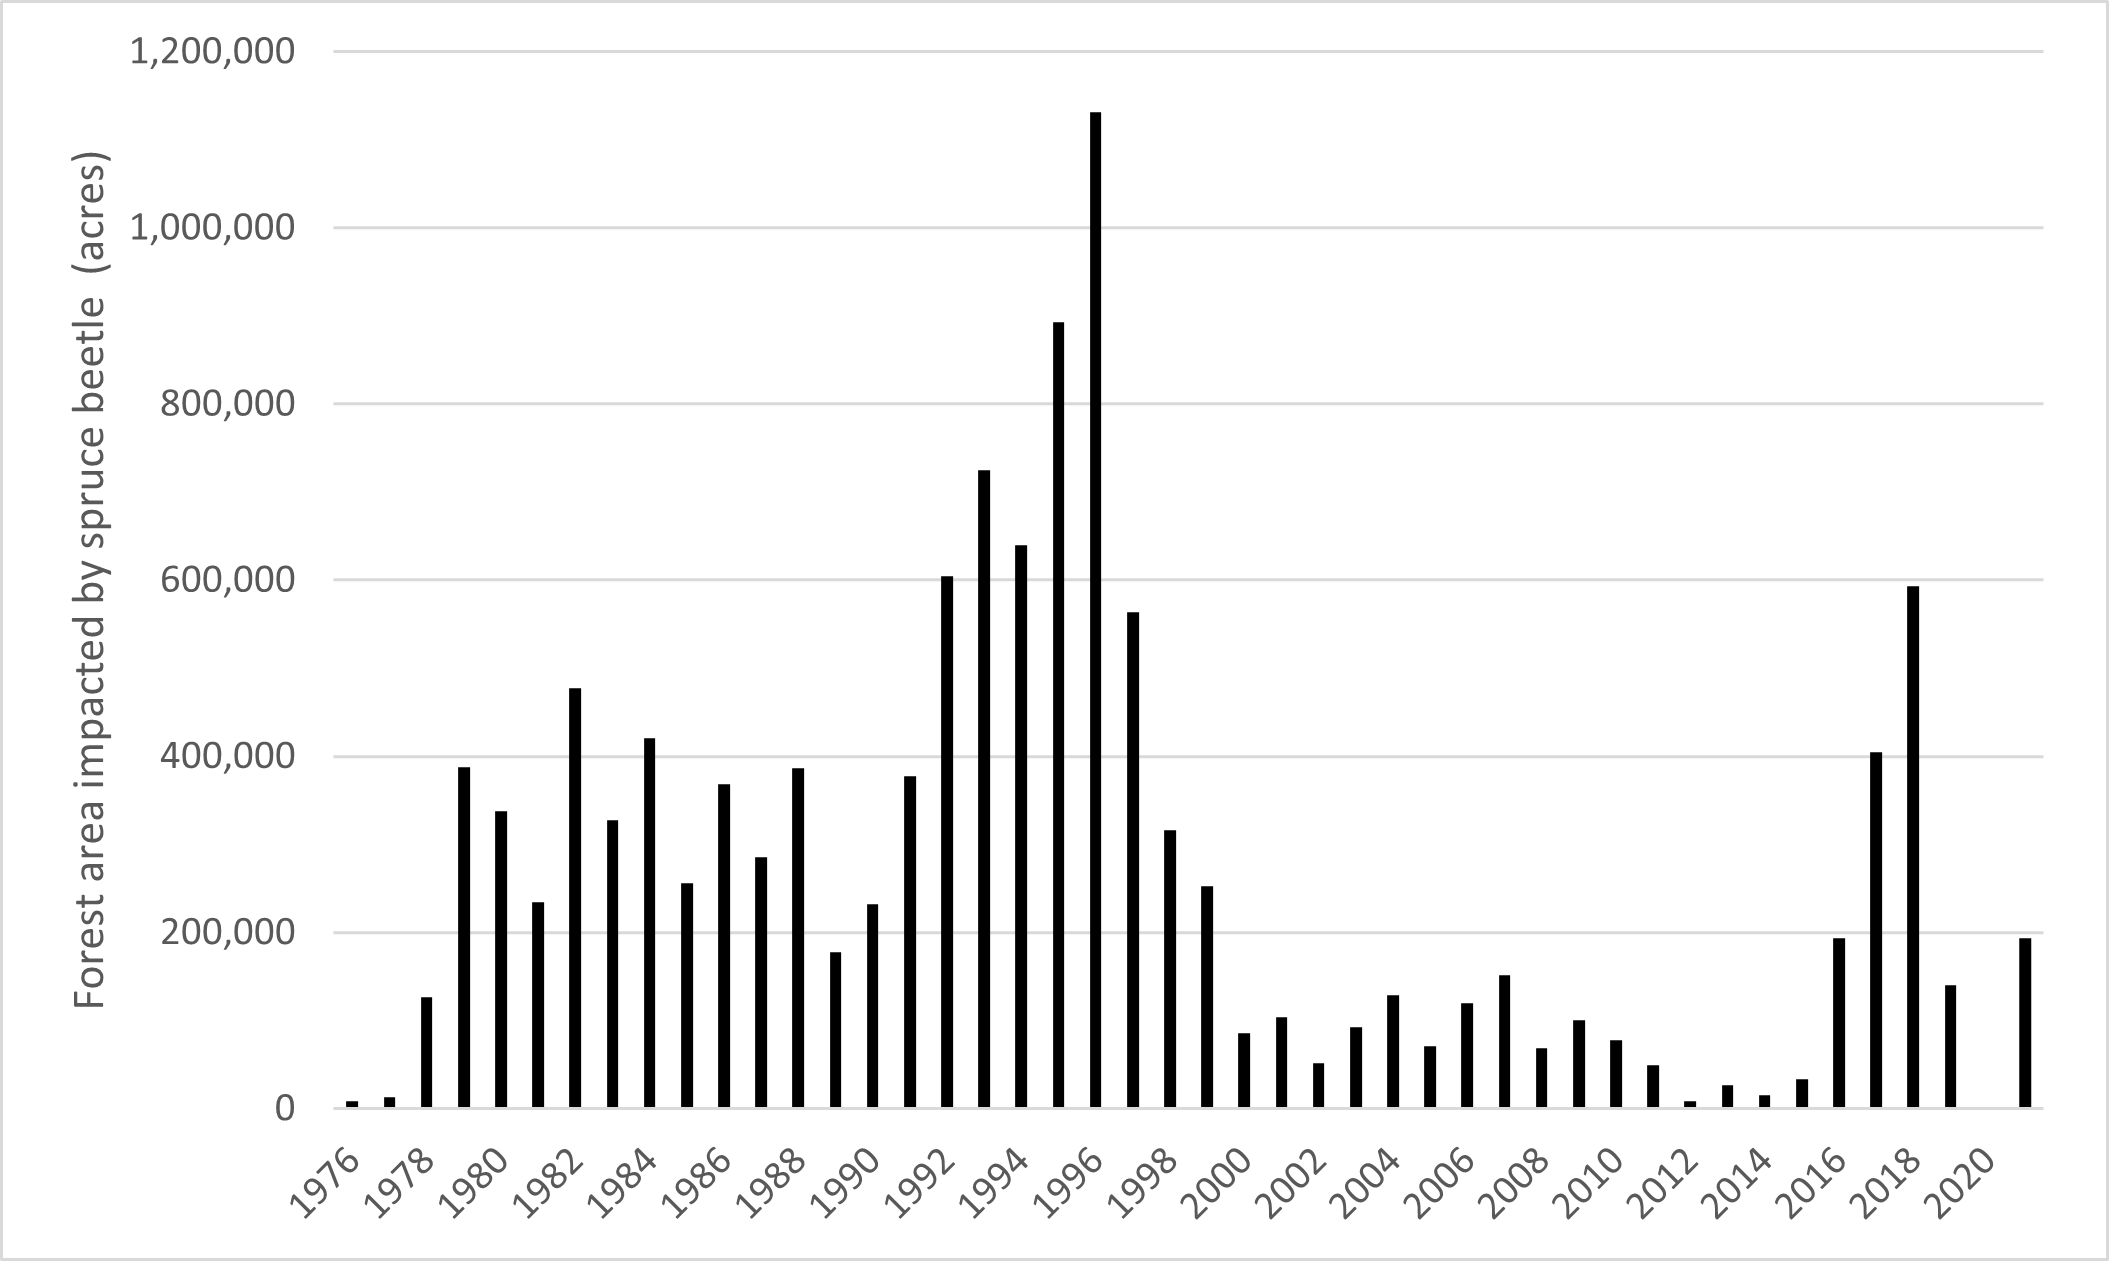 Spruce Beetle Damage 1976 to 2021